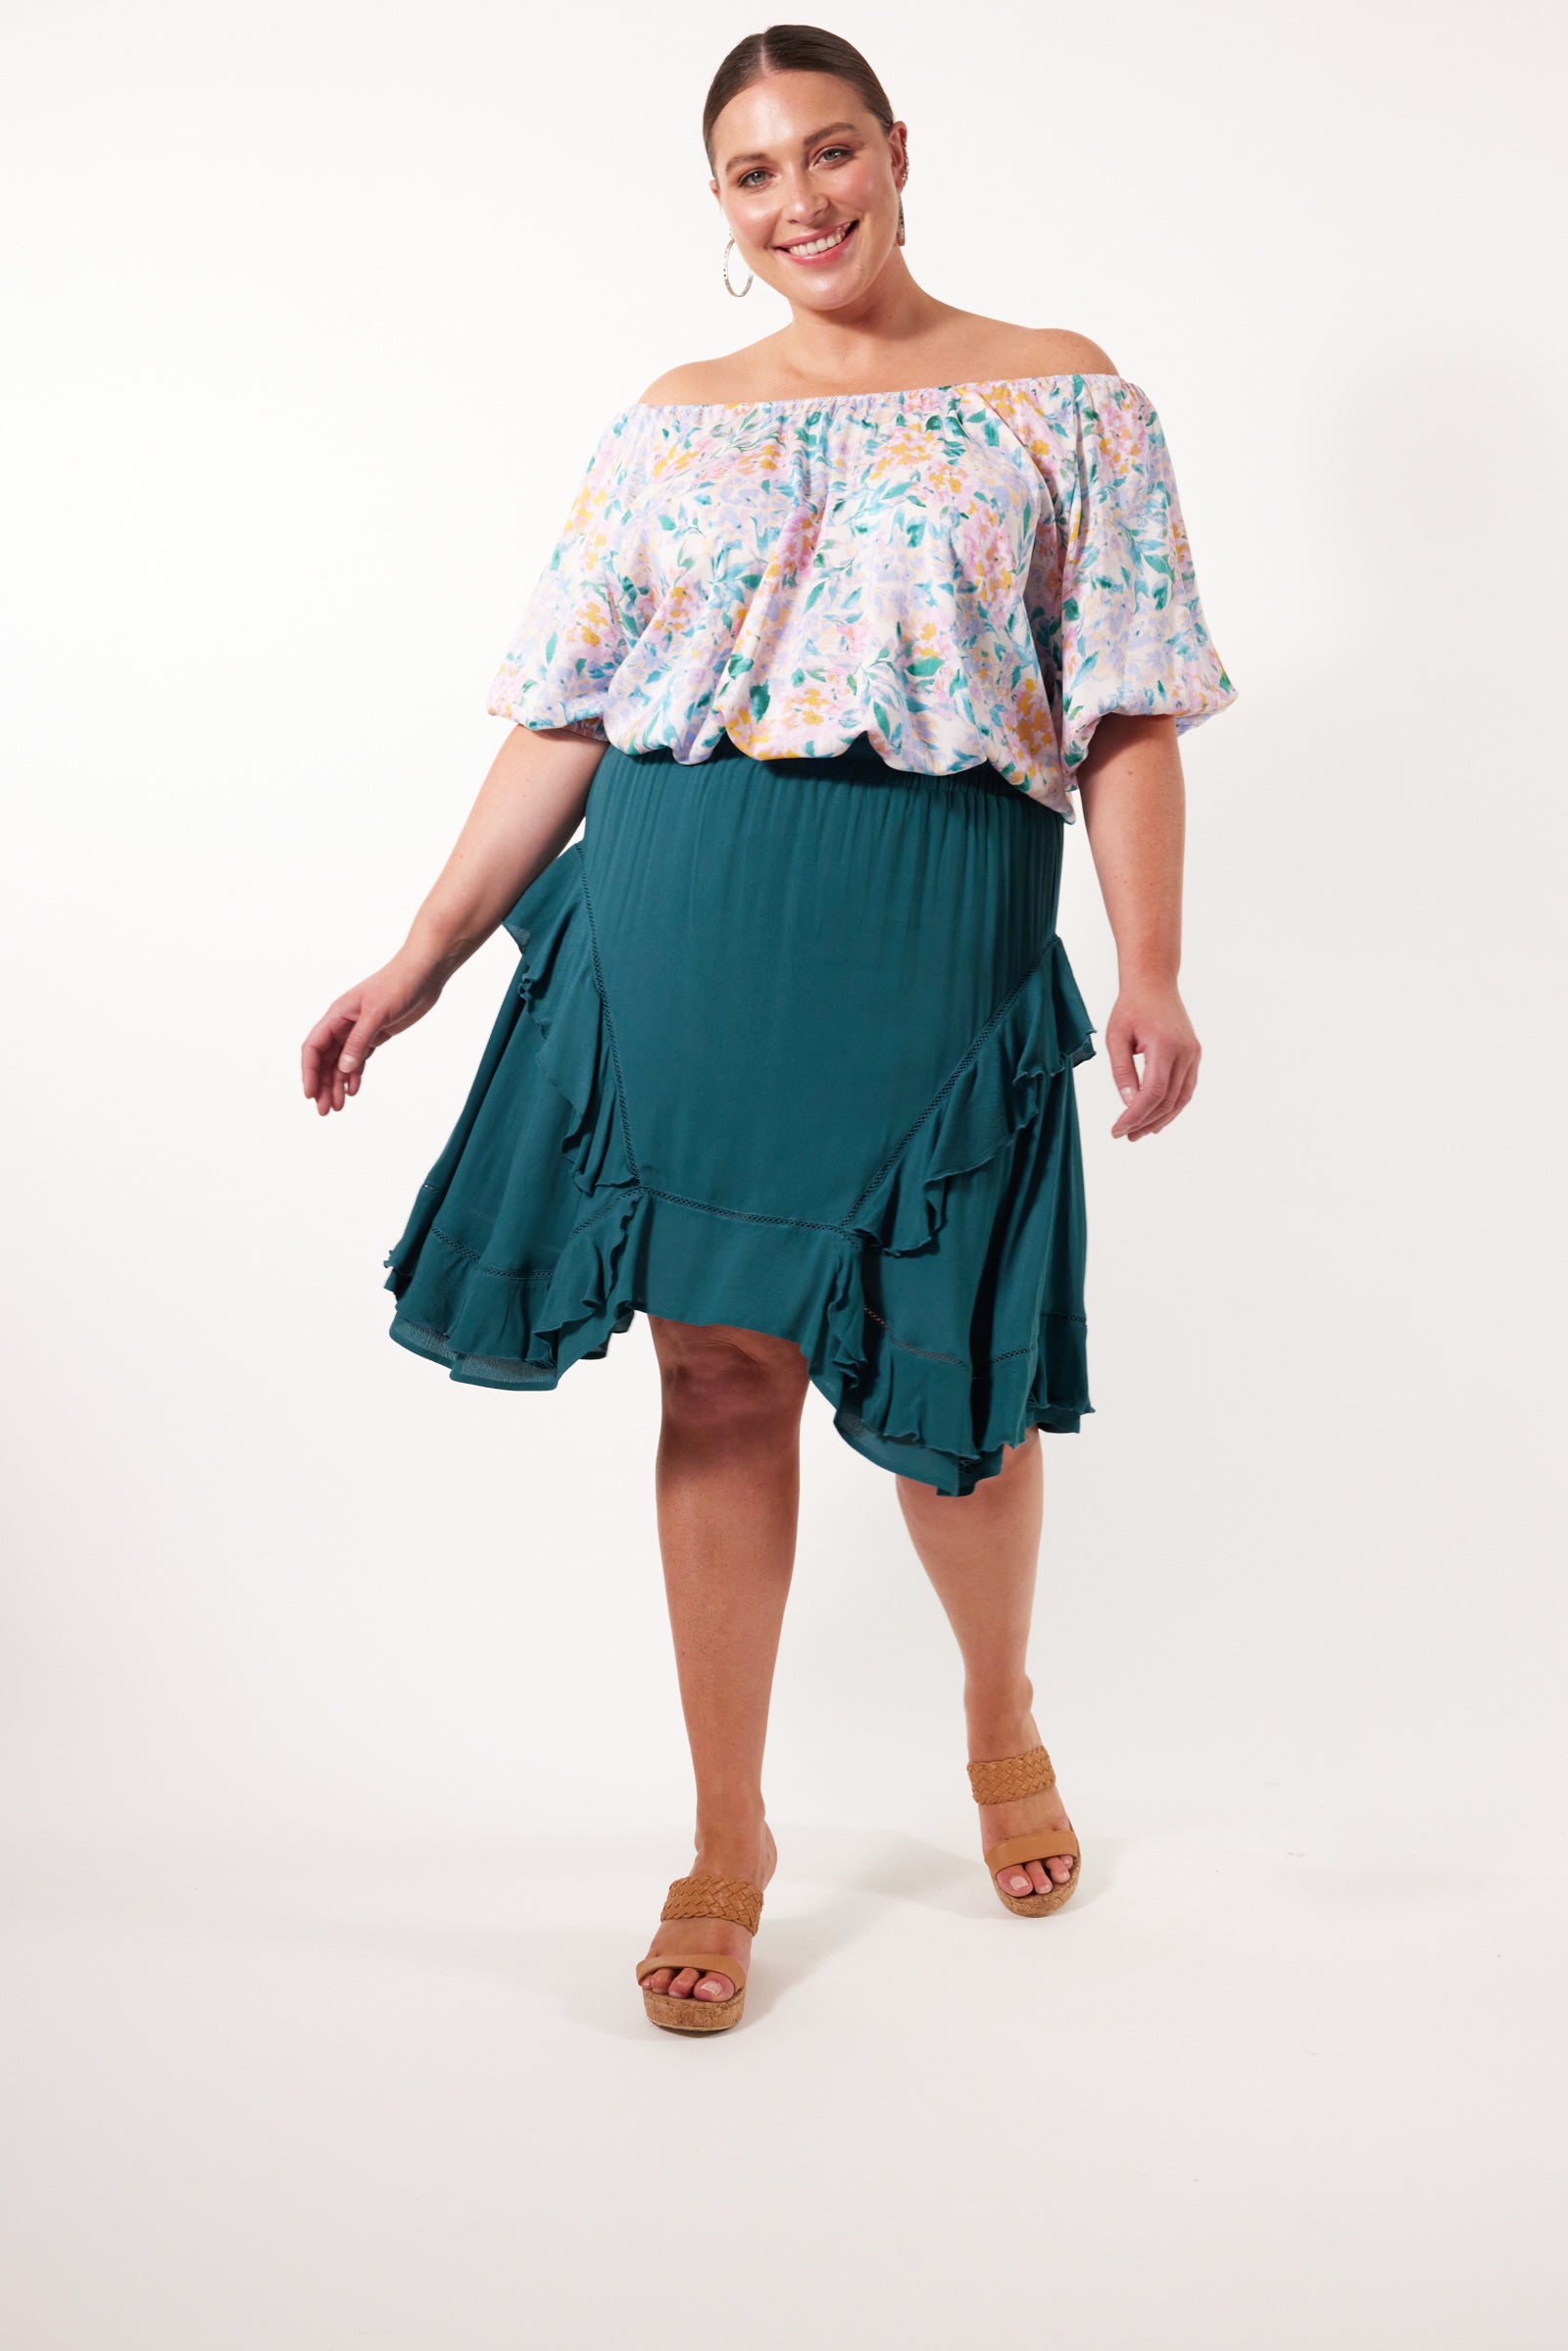 Botanical Skirt - Teal - Isle of Mine Clothing - Skirt Mini